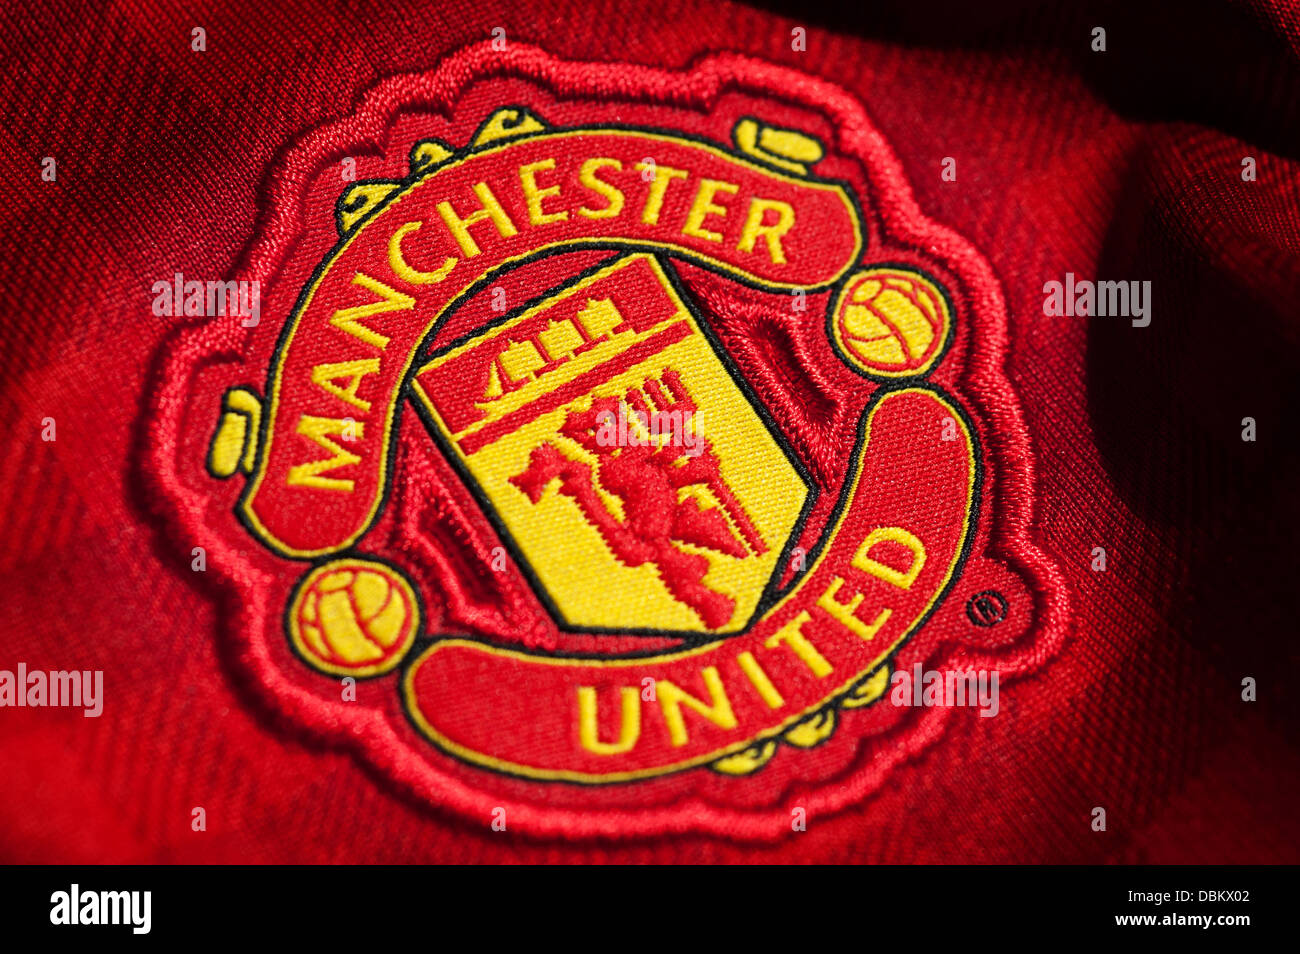 Manchester United Football Club Crest Stockfoto